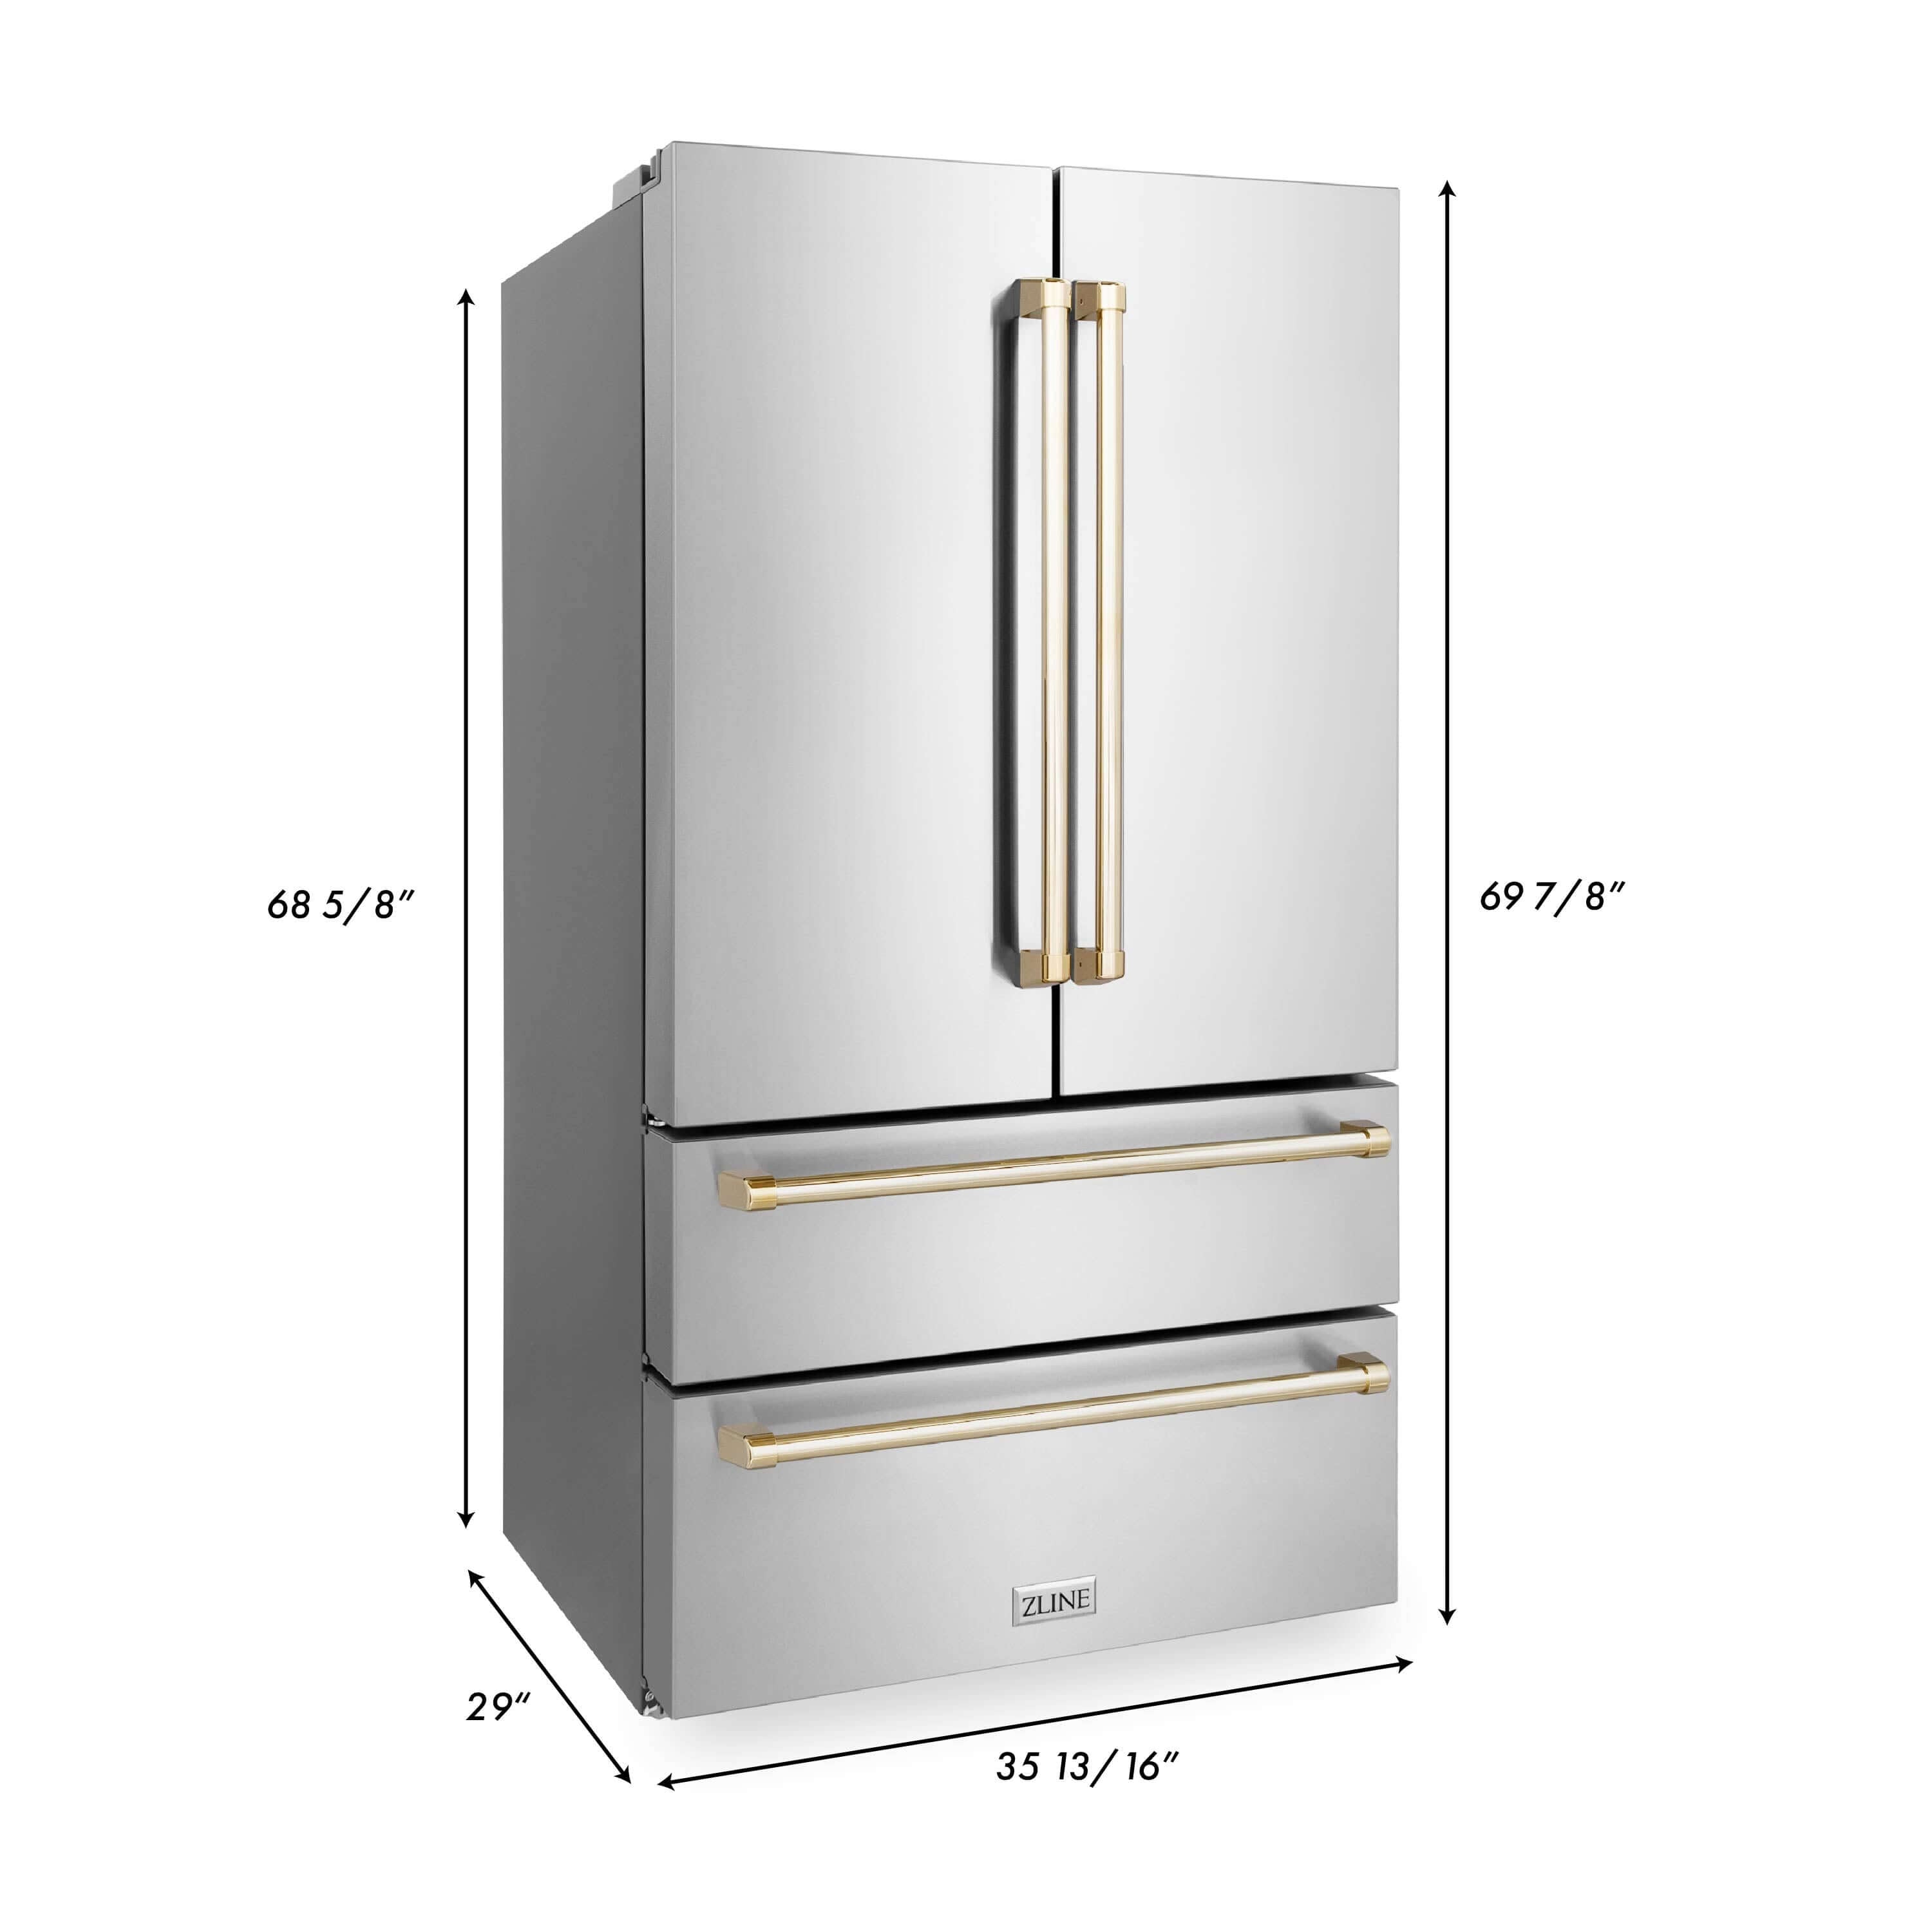 ZLINE 36" French Door Refrigerator (RFM) dimensional measurements.